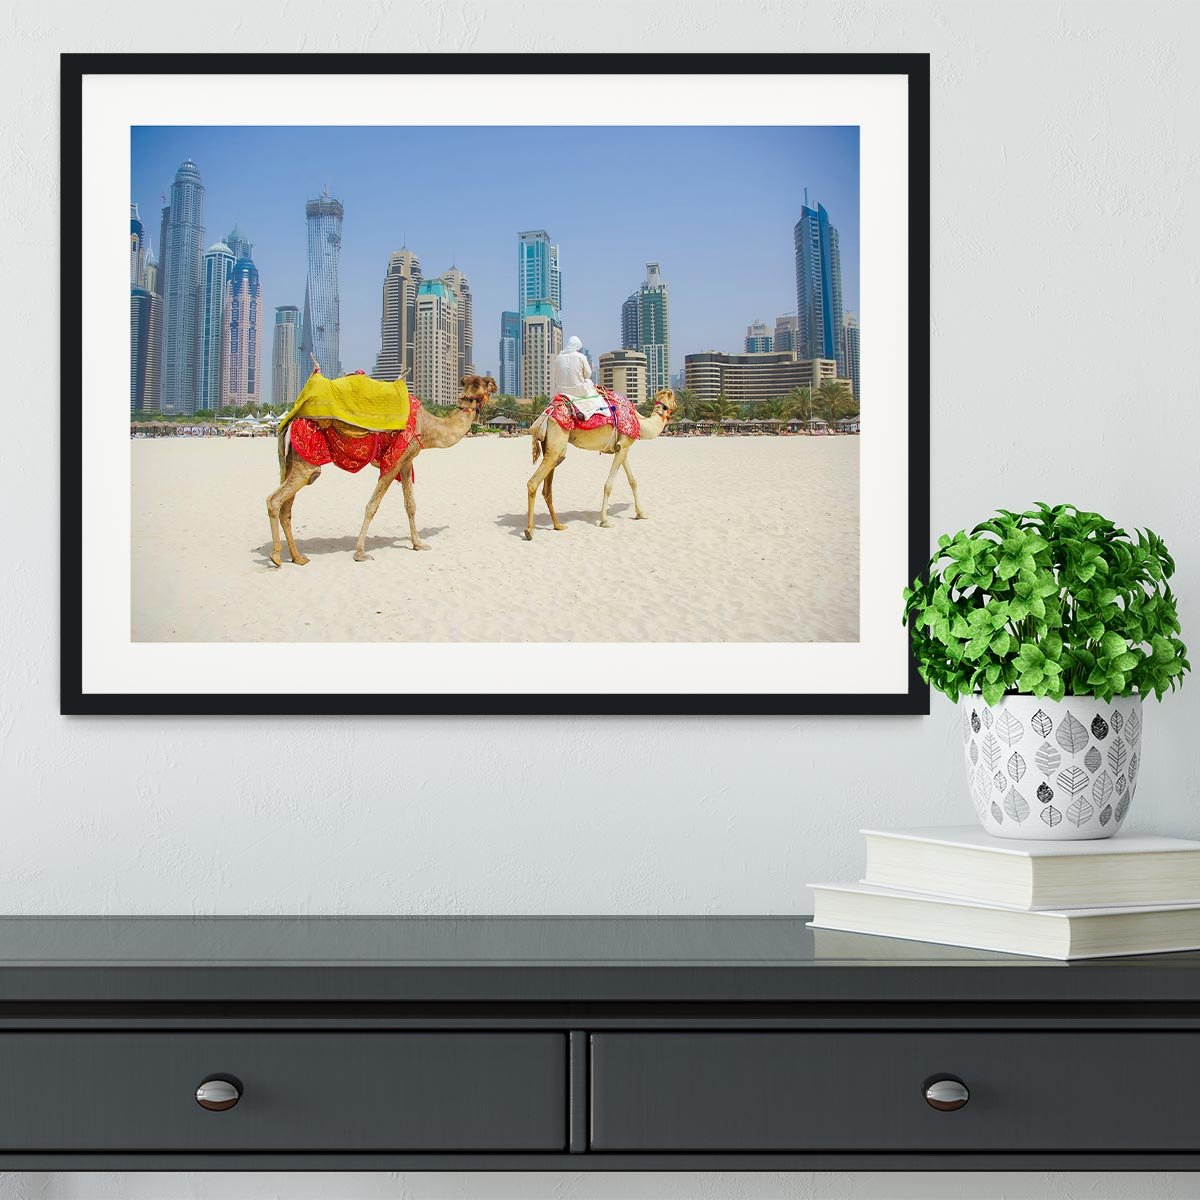 Dubai Camel on the town scape backround Framed Print - Canvas Art Rocks - 1